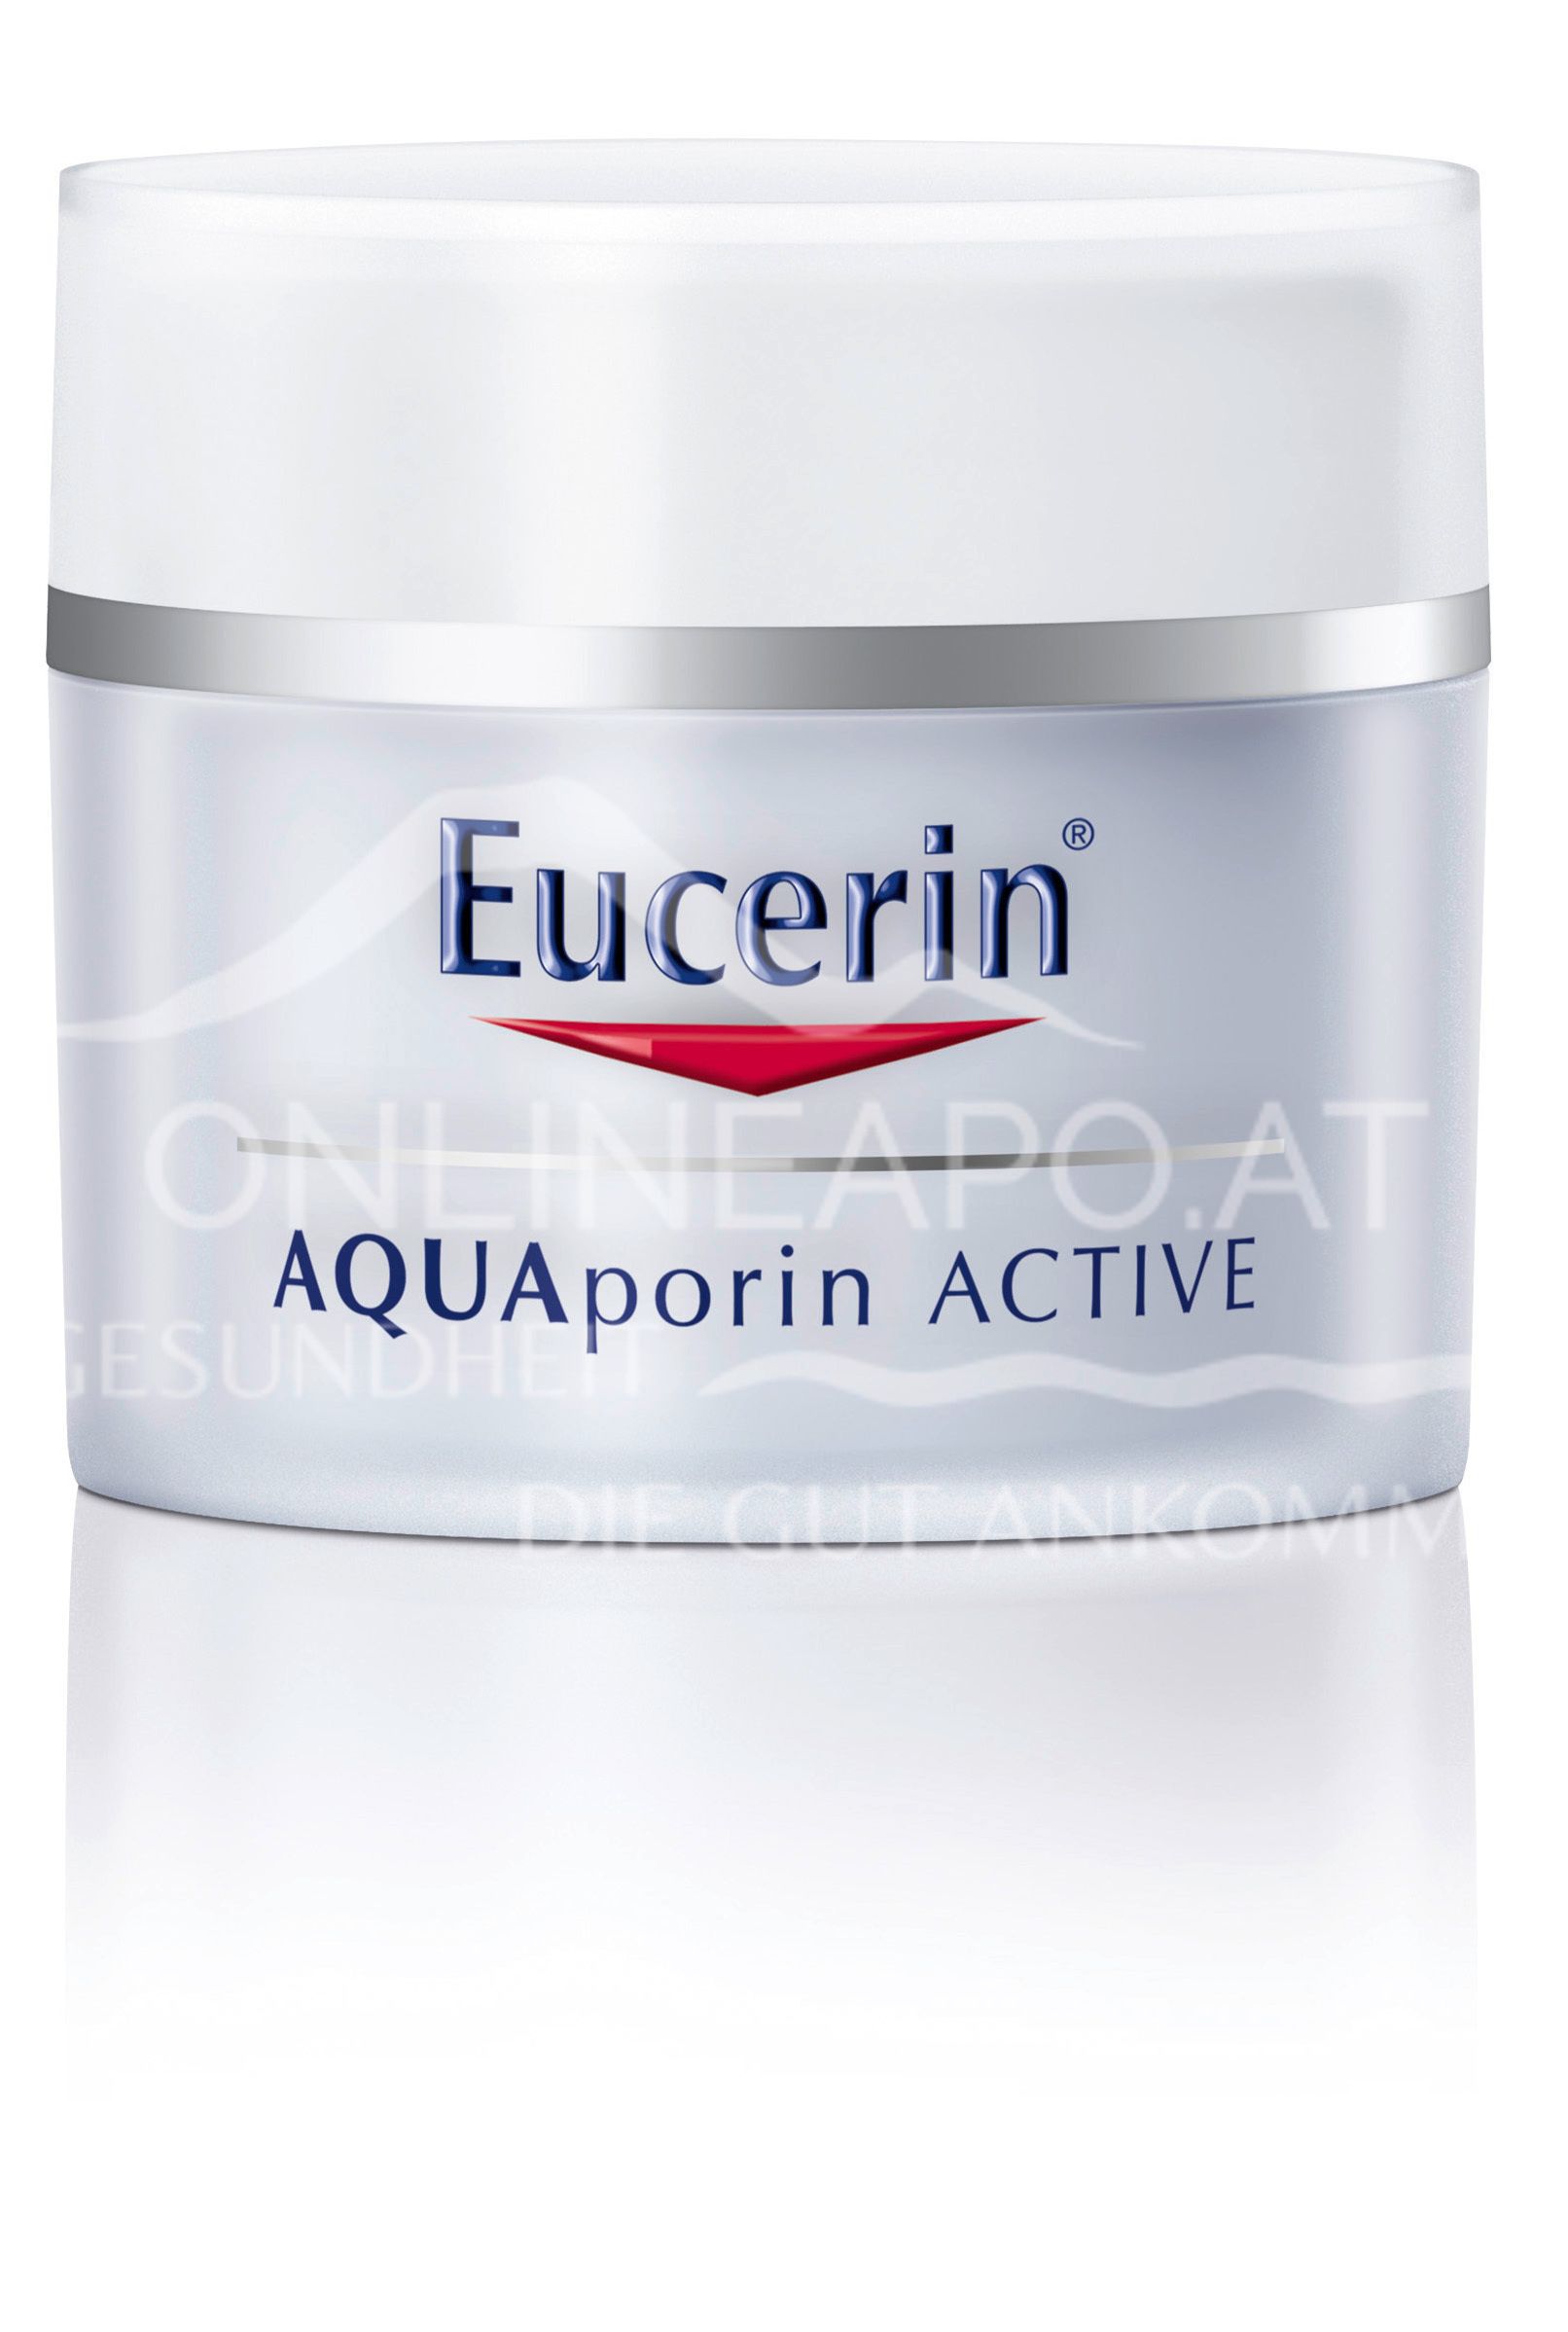 Eucerin® AQUAporin ACTIVE für normale Haut bis Mischhaut